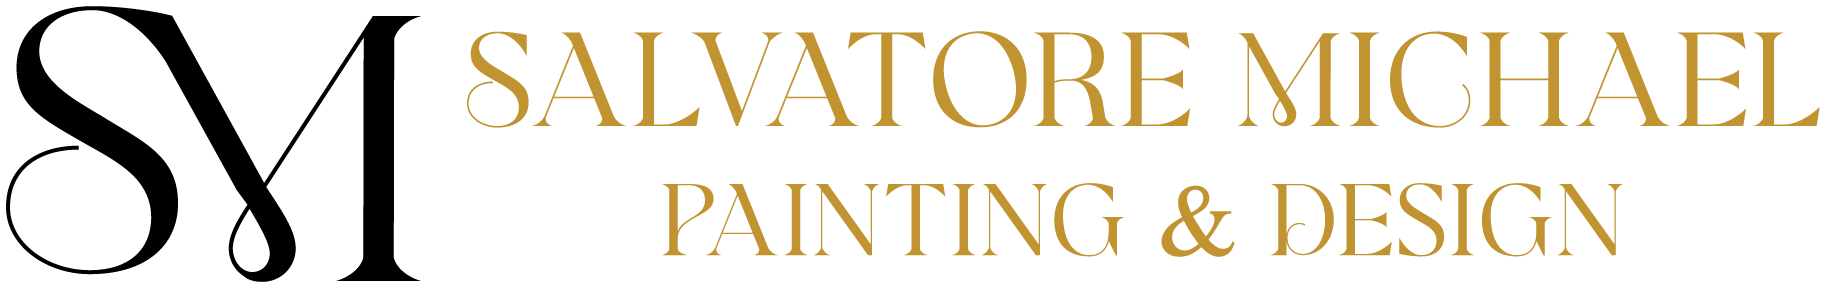 Salvatore Michael Painting & Design Header Logo